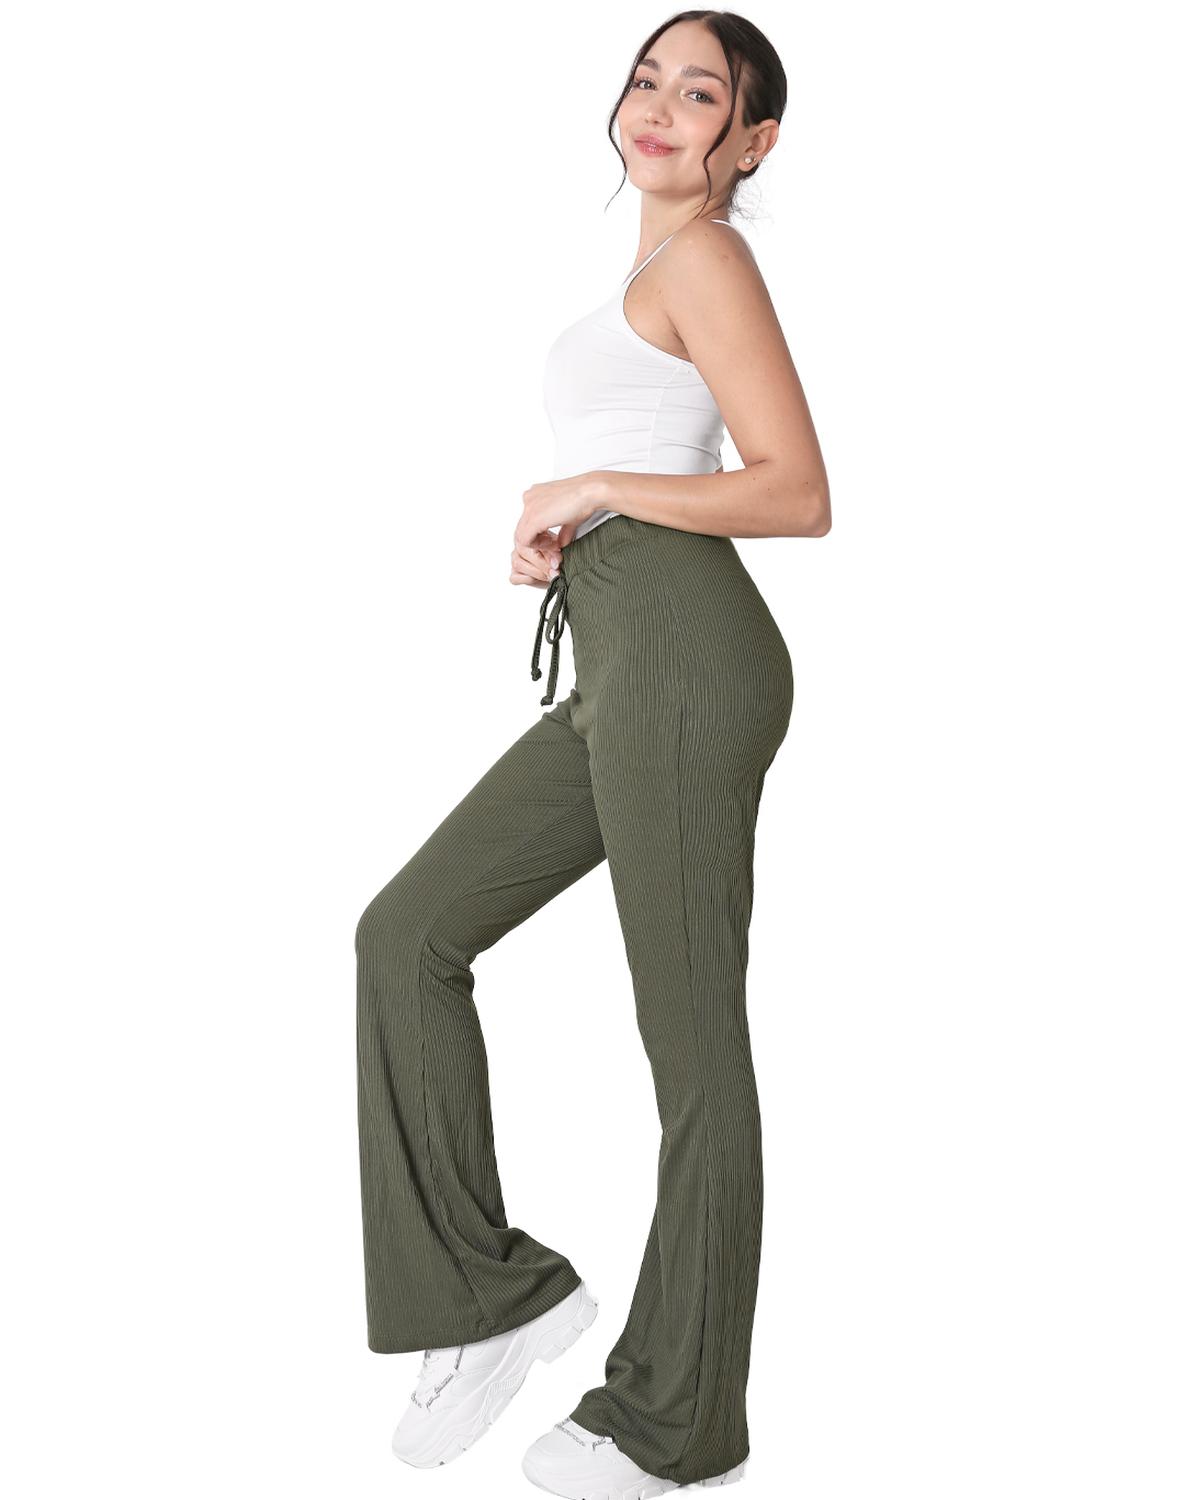 Pants Acampanado Mujer Verde Stfashion 52404806